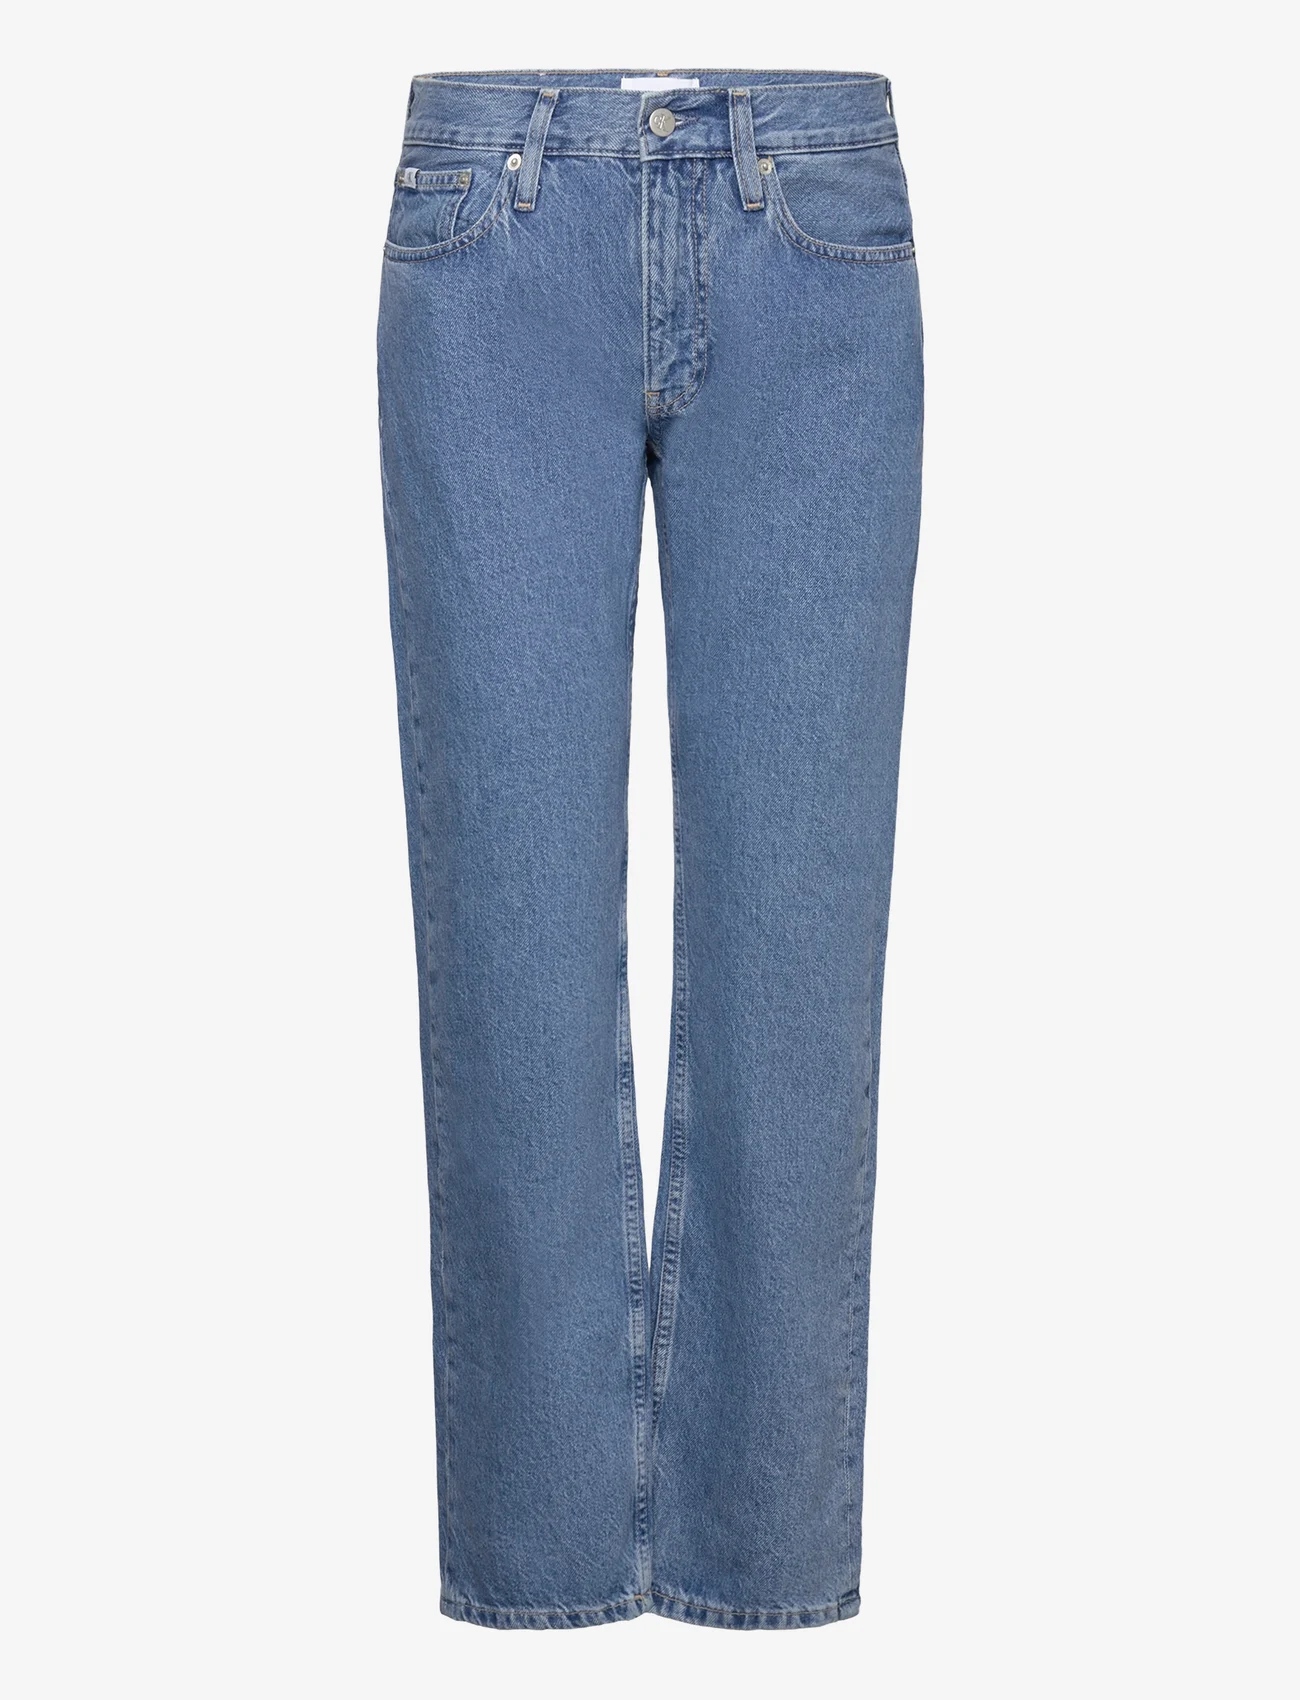 Calvin Klein Jeans - LOW RISE STRAIGHT - straight jeans - denim medium - 0